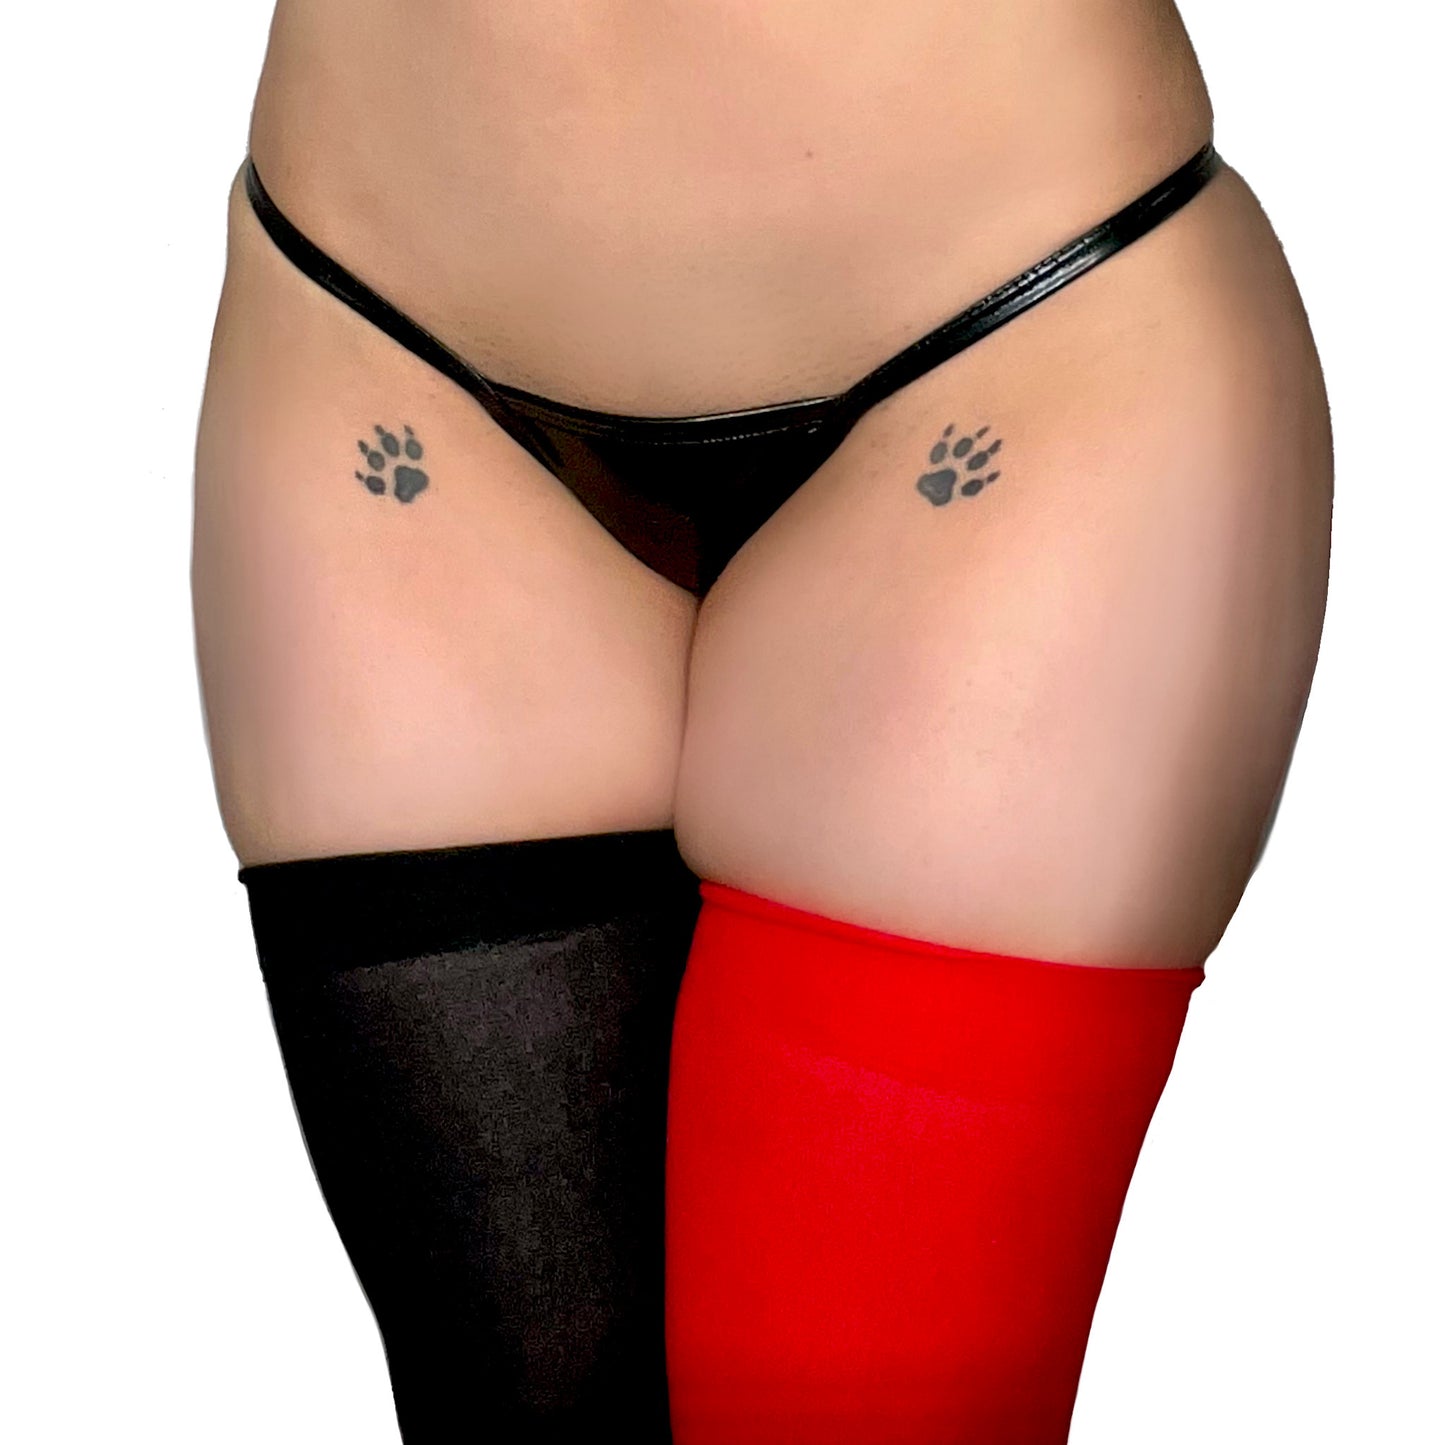 Vlad Thigh High Stockings: Red n' Black